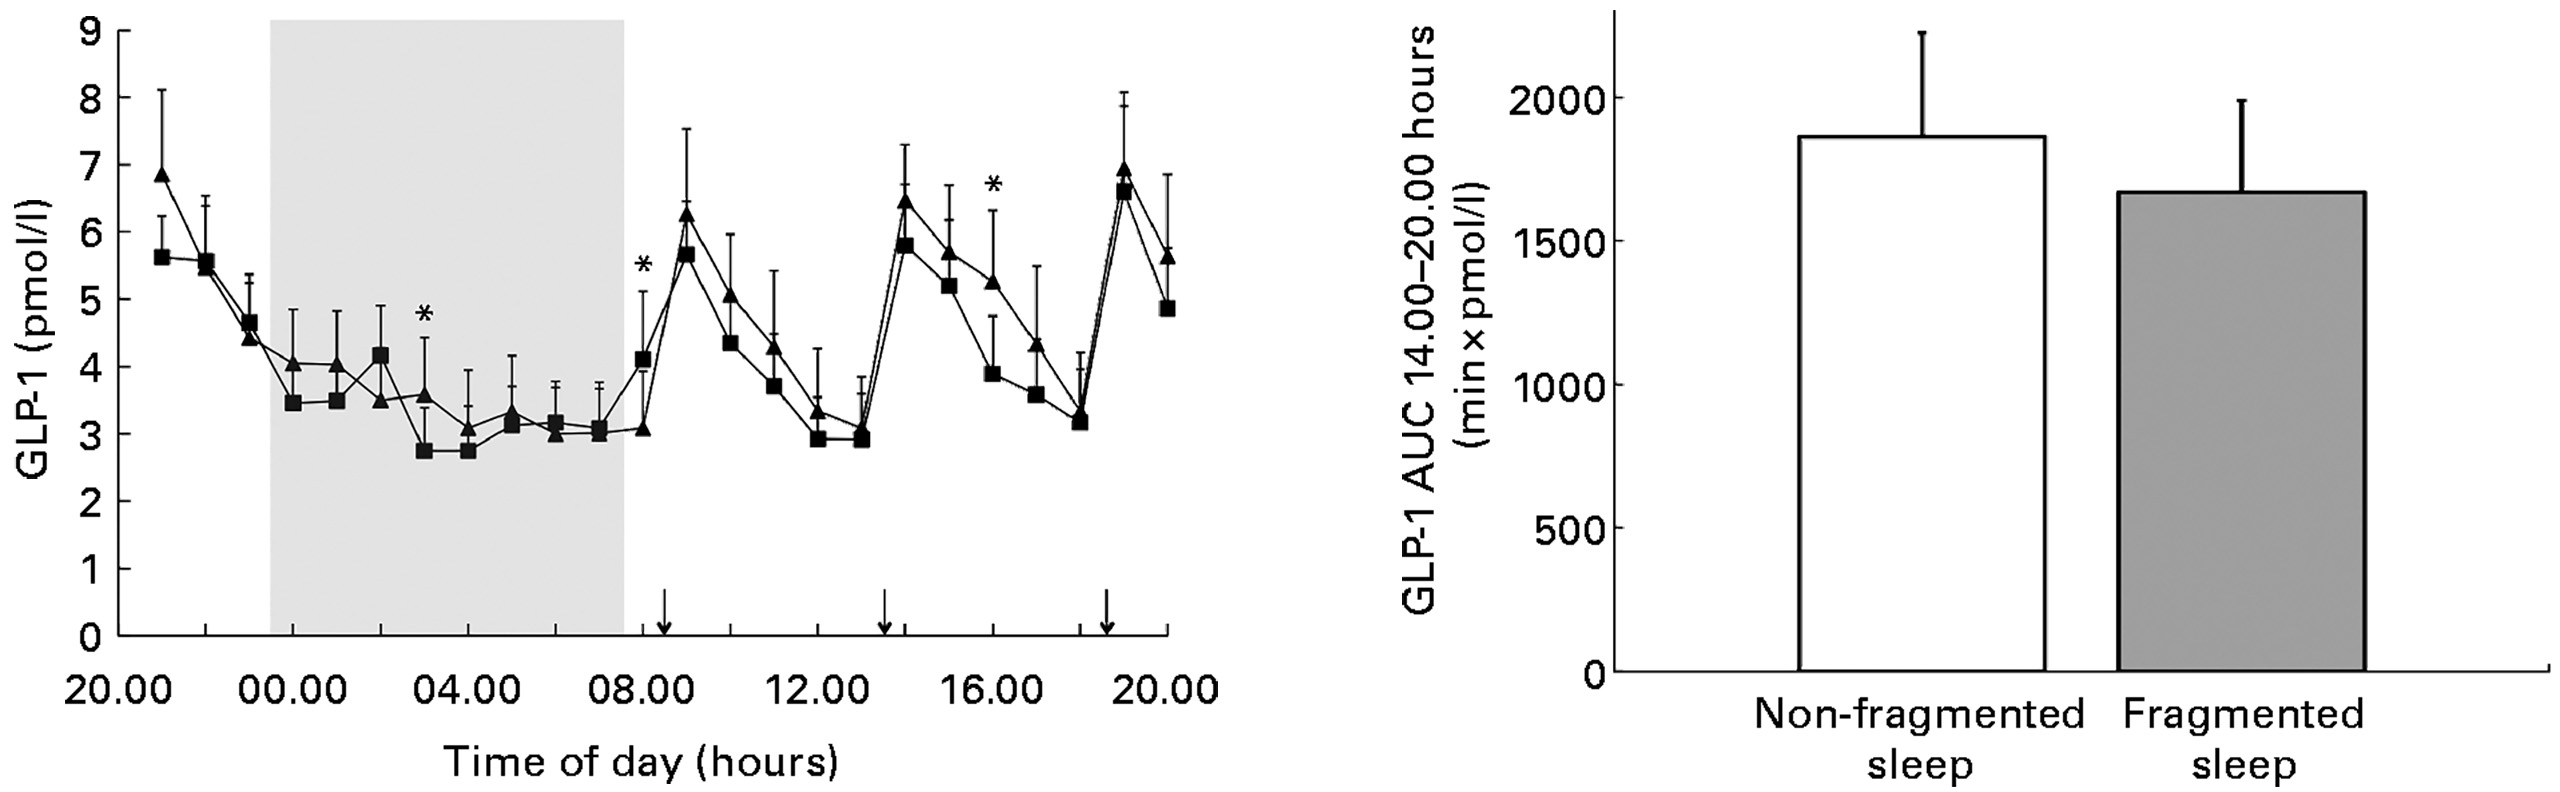 Variation de GLP-1 selon la fragmentation du sommeil